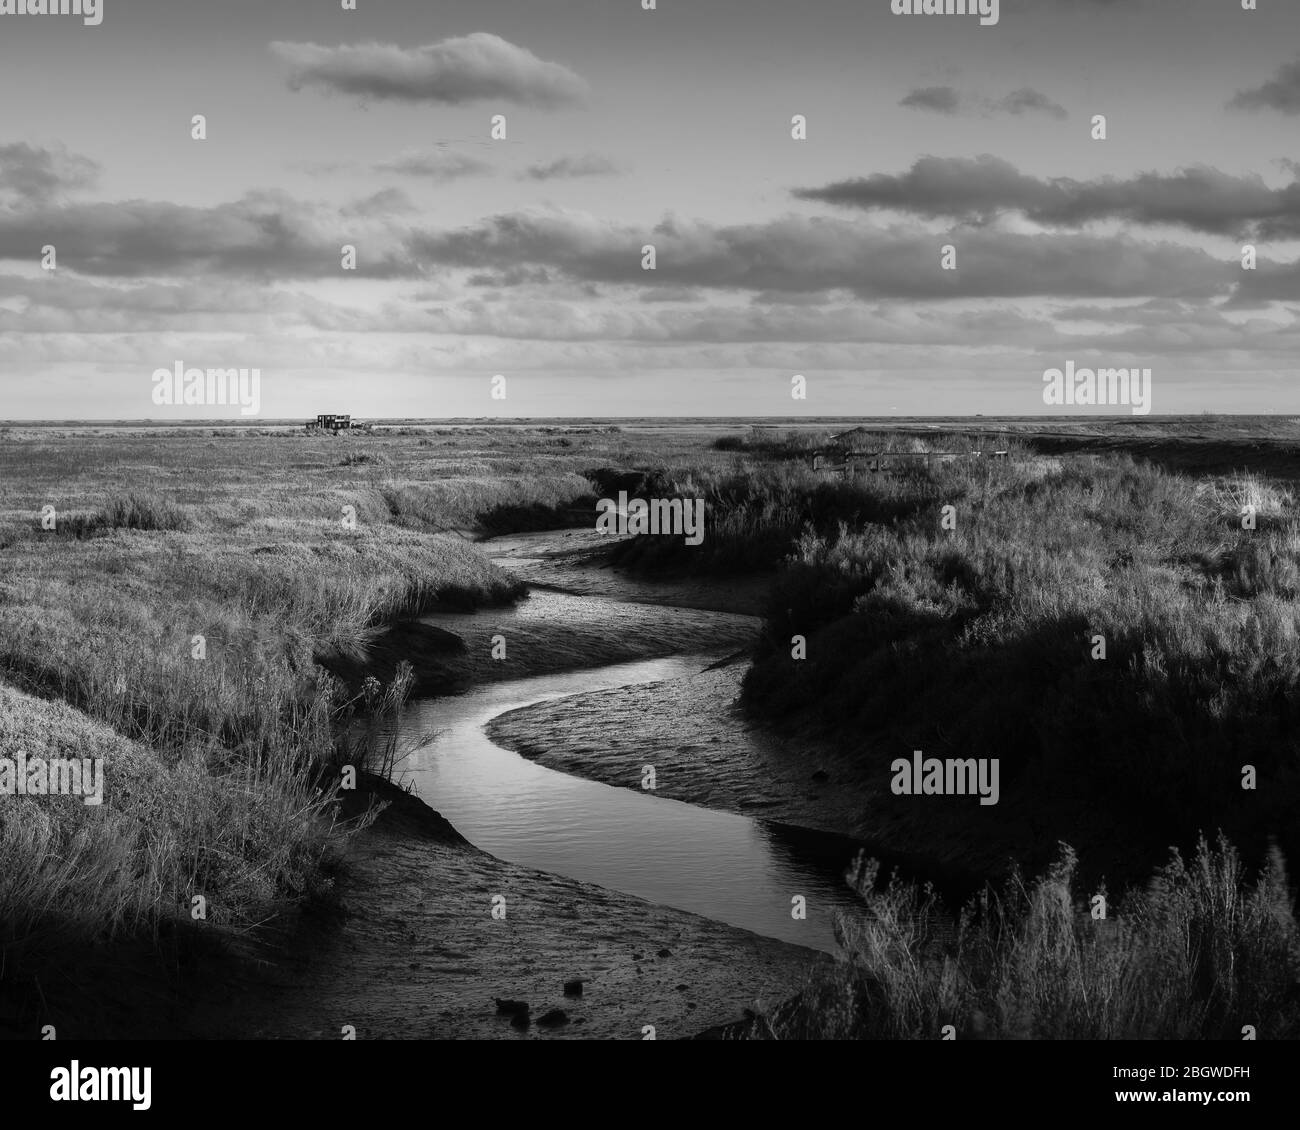 Morning on Blakeney saltmarshes. Winding creek through marshes -Blakeney, January 2018 Stock Photo